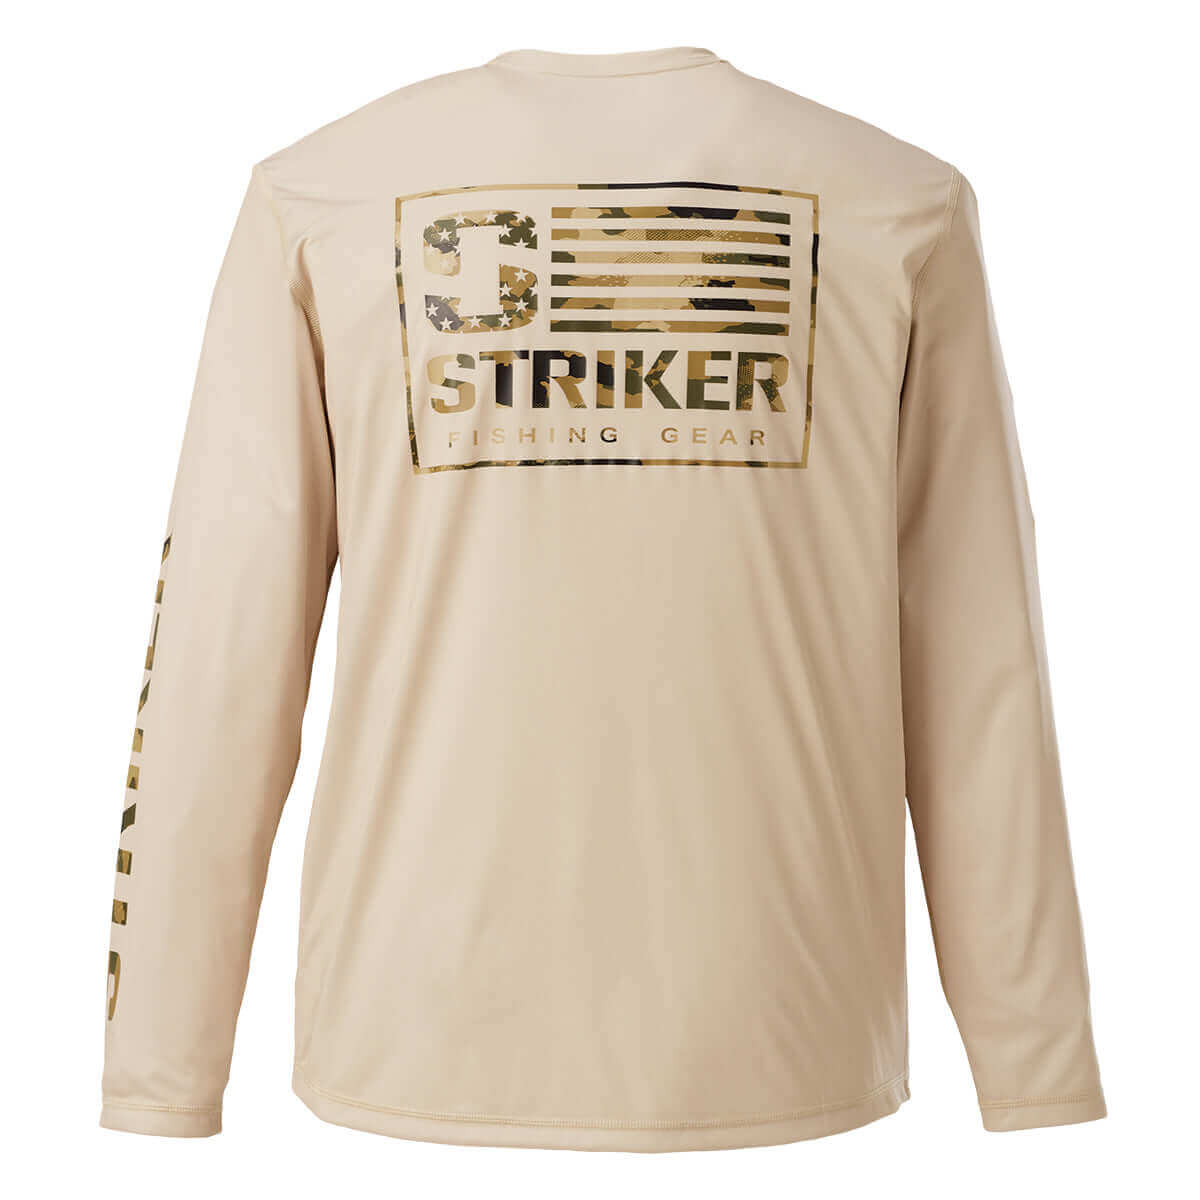  Striker Men's Wavebreak UPF 50+ Lightweight Moisture Wicking Fishing  Shirt - Casual Active Long-Sleeve Top with Logo Print, Carolina, Small :  Sports & Outdoors